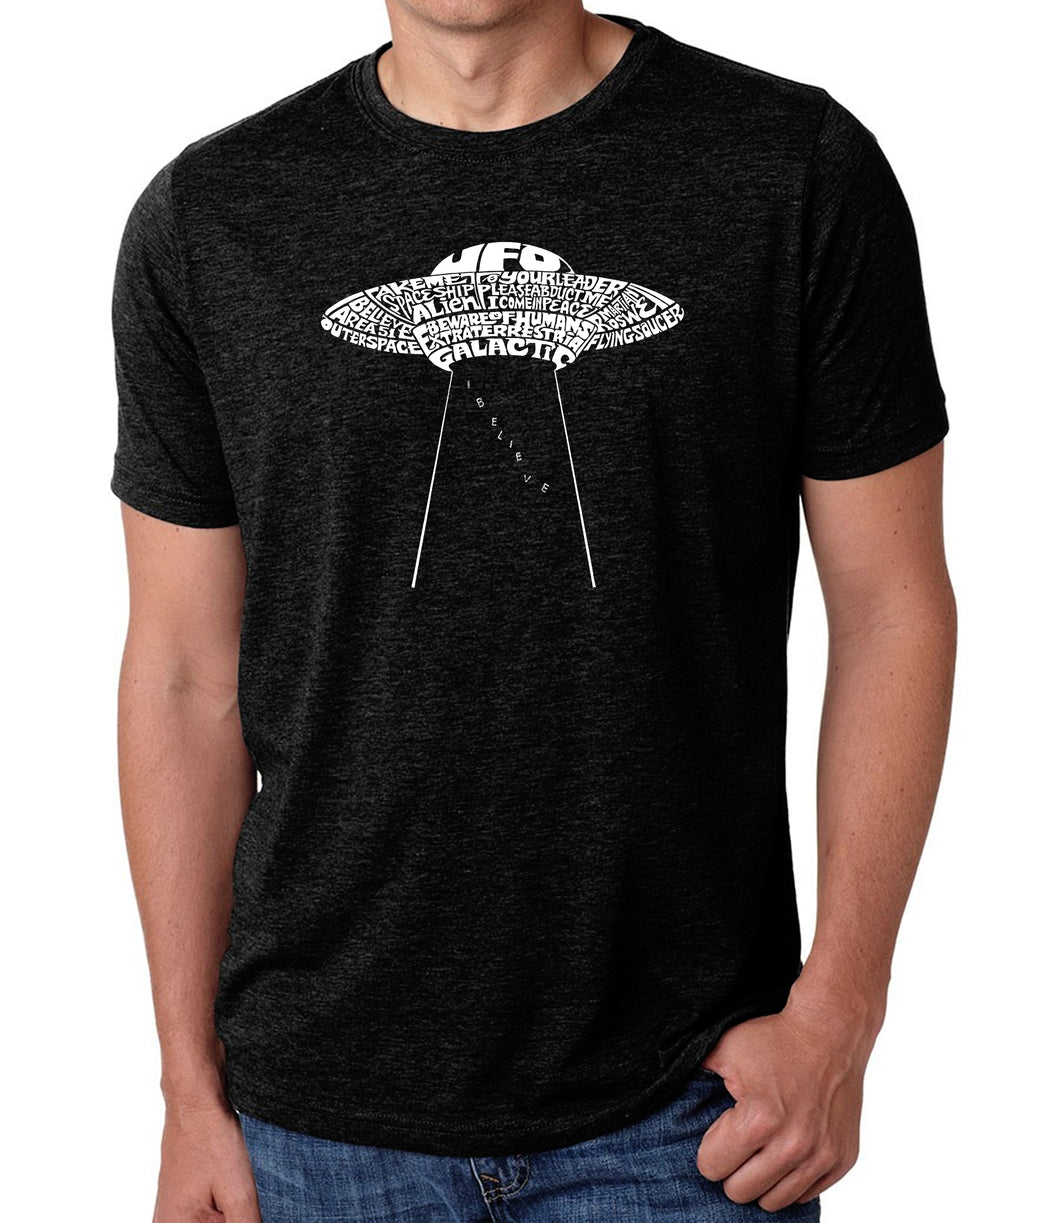 Flying Saucer UFO - Men's Premium Blend Word Art T-Shirt